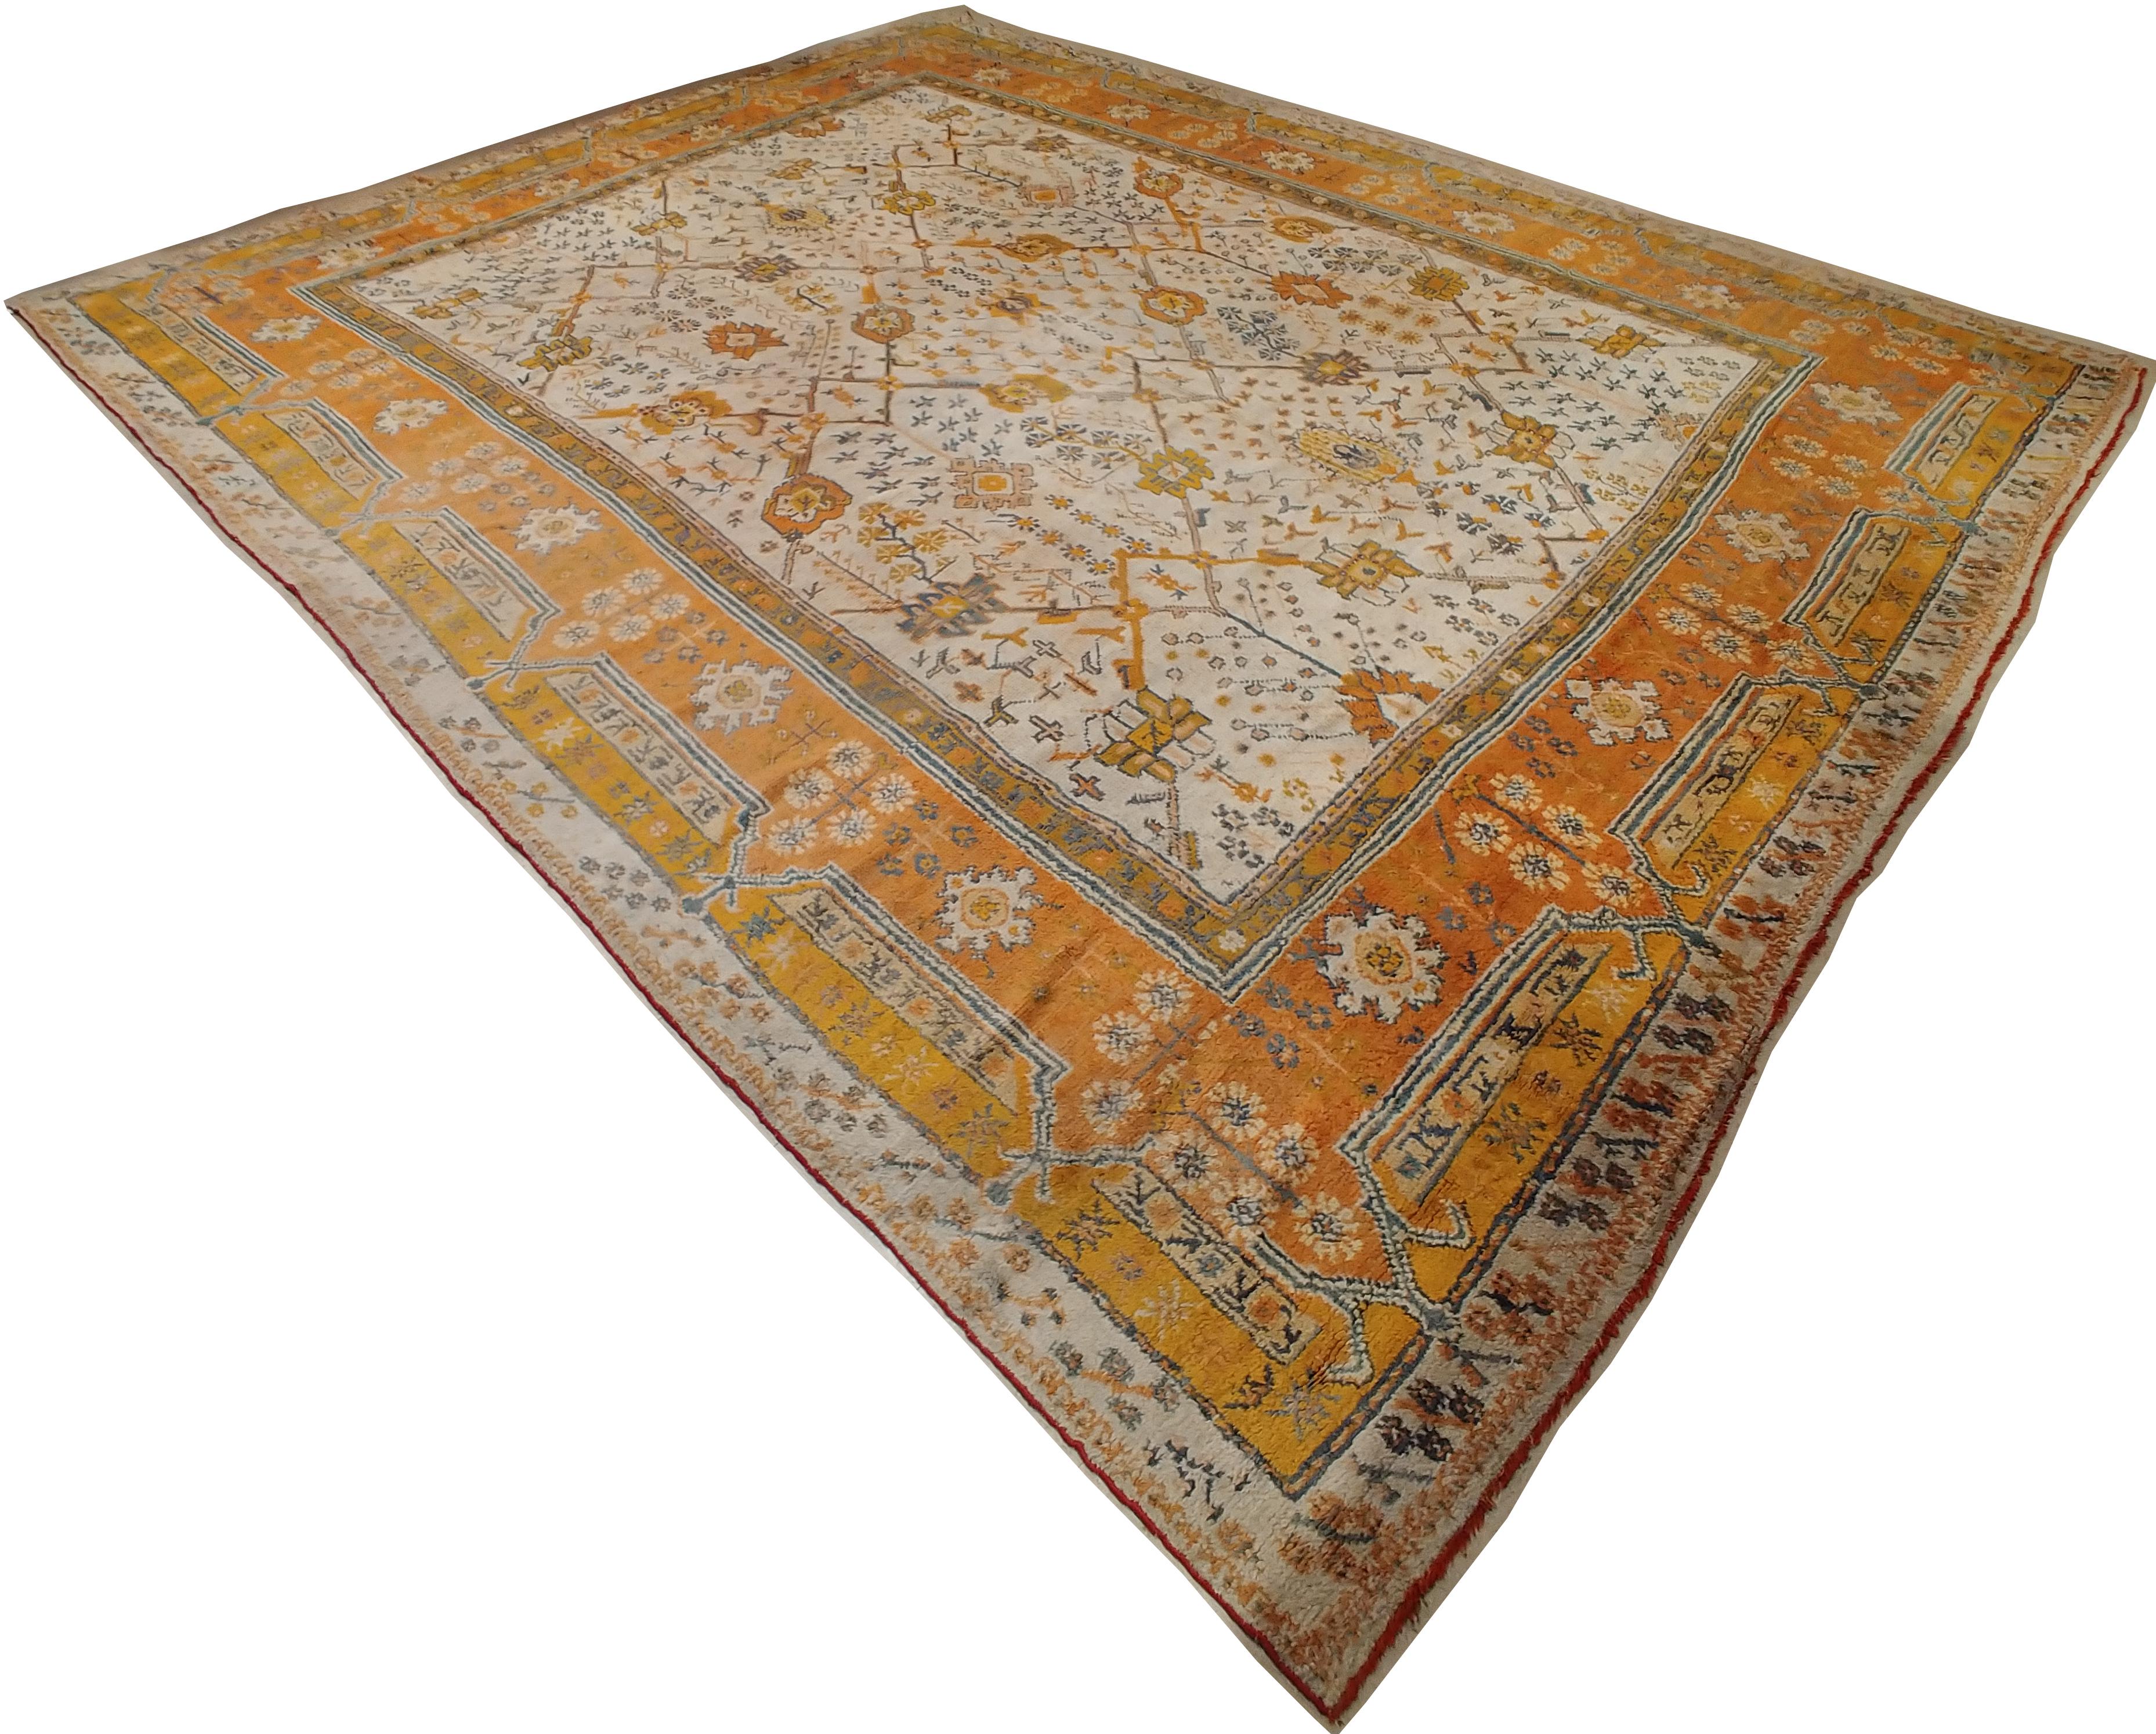 Antique Oushak Carpet, Oriental Rug, Handmade Ivory, Muted Orange, Soft Saffron For Sale 6